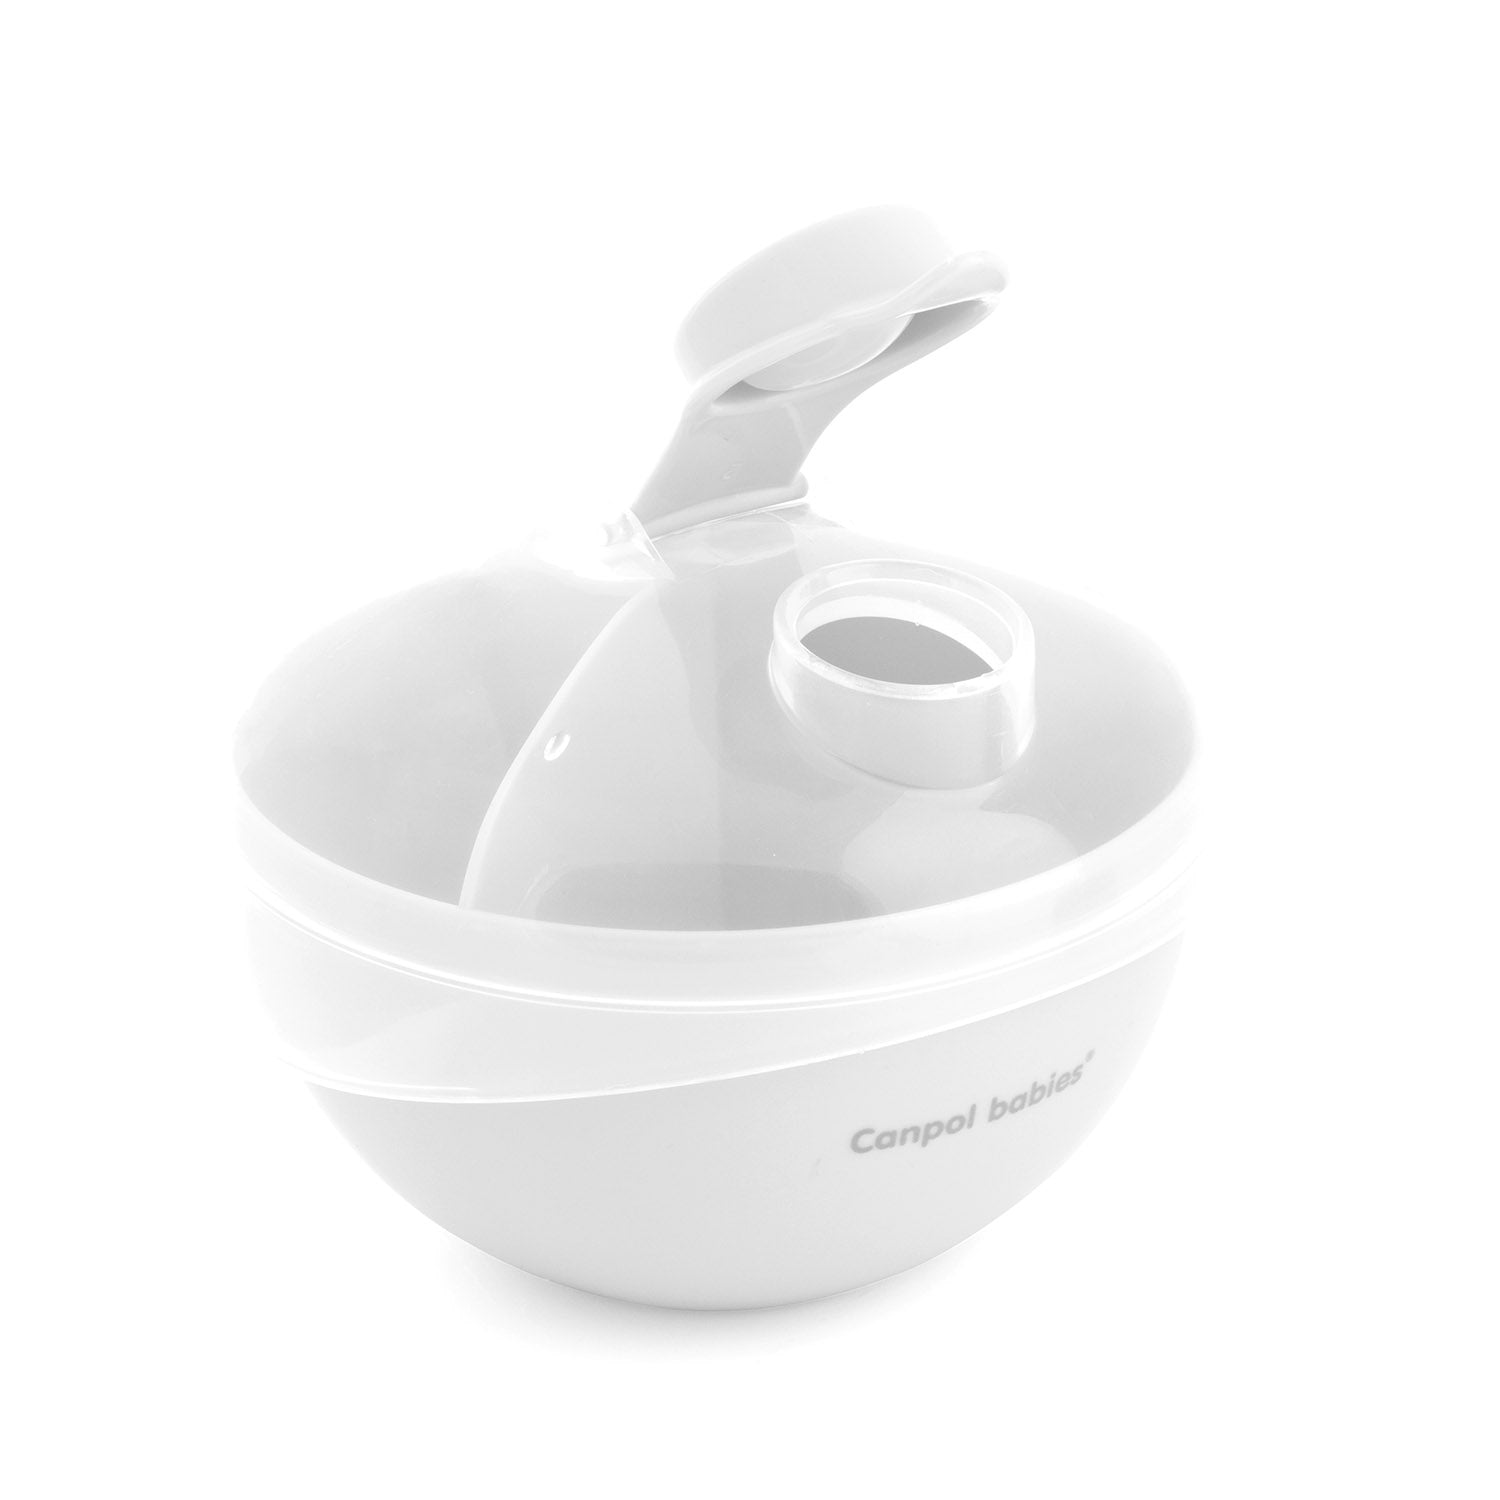 Canpol Babies: Biały Milk Powder Dispenser powdered milk container